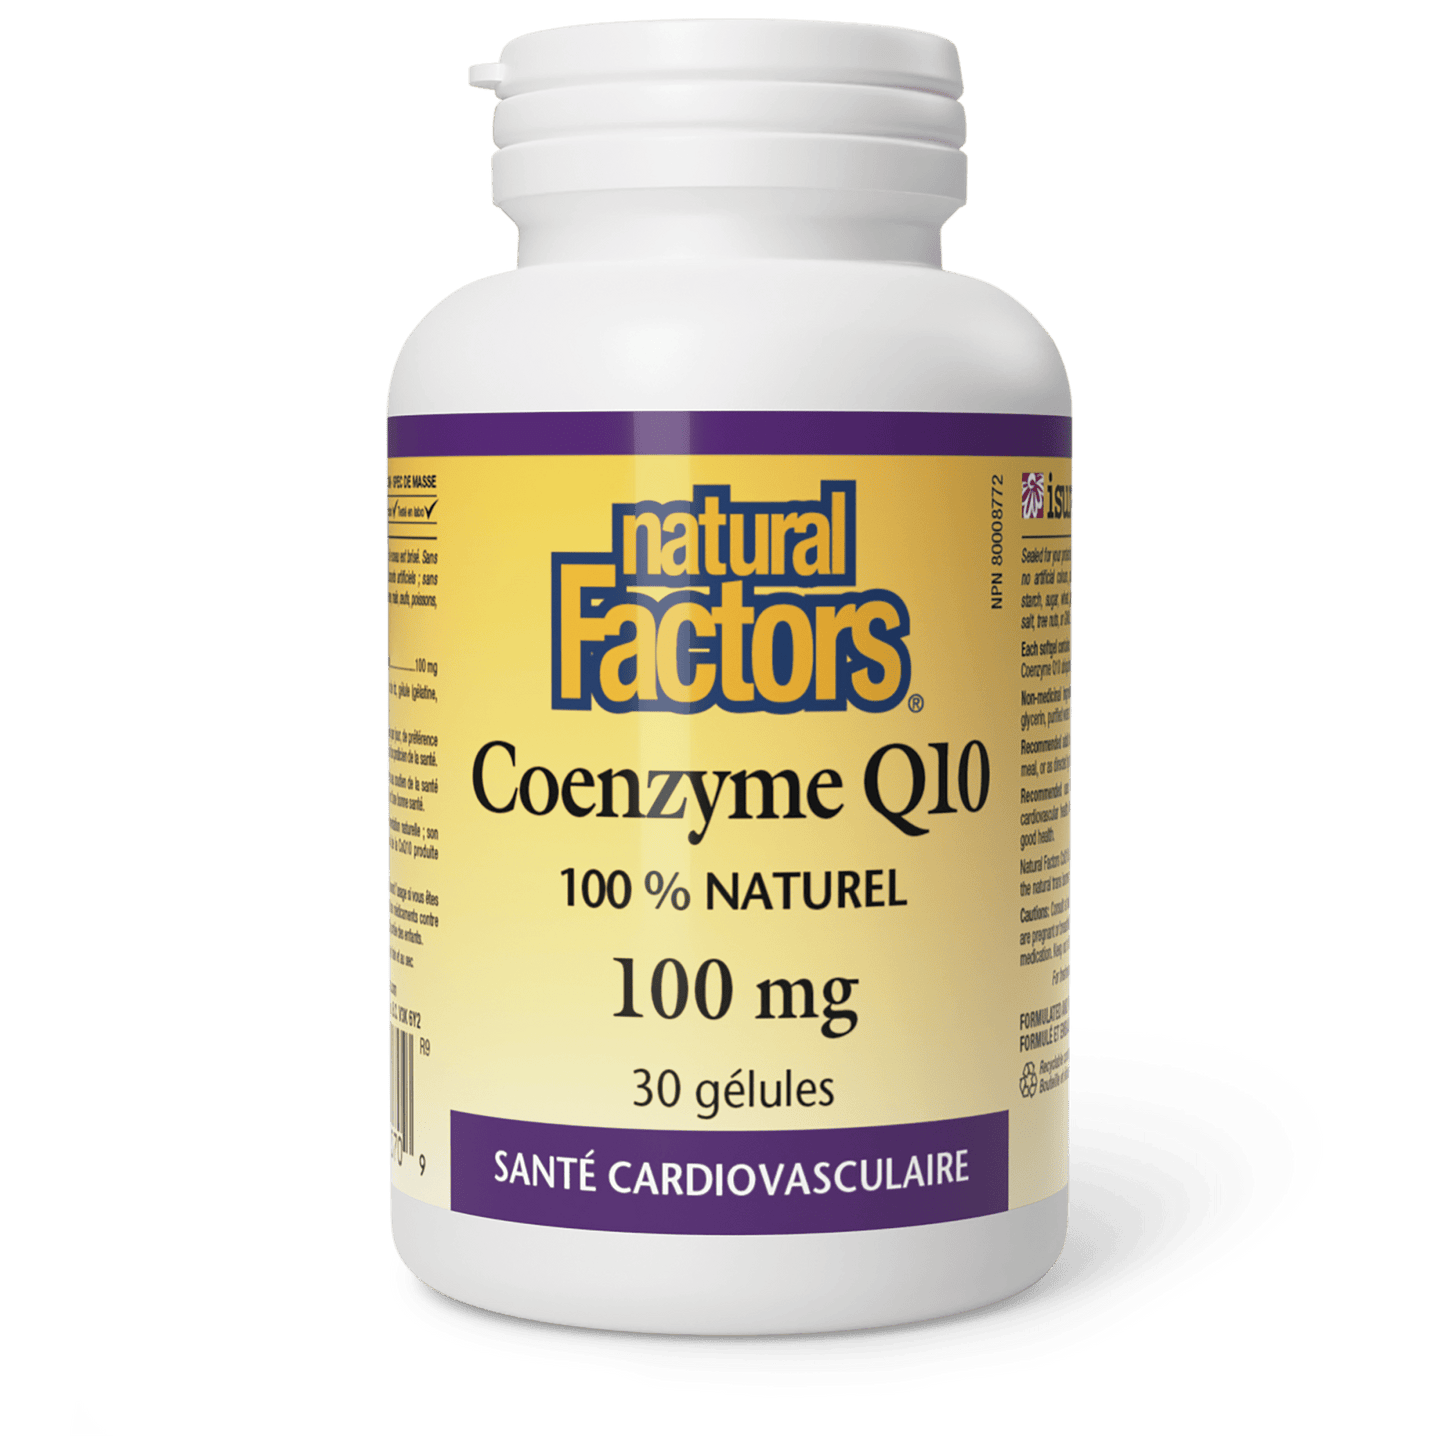 Coenzyme Q10 100 % naturel 100 mg, Natural Factors|v|image|2070